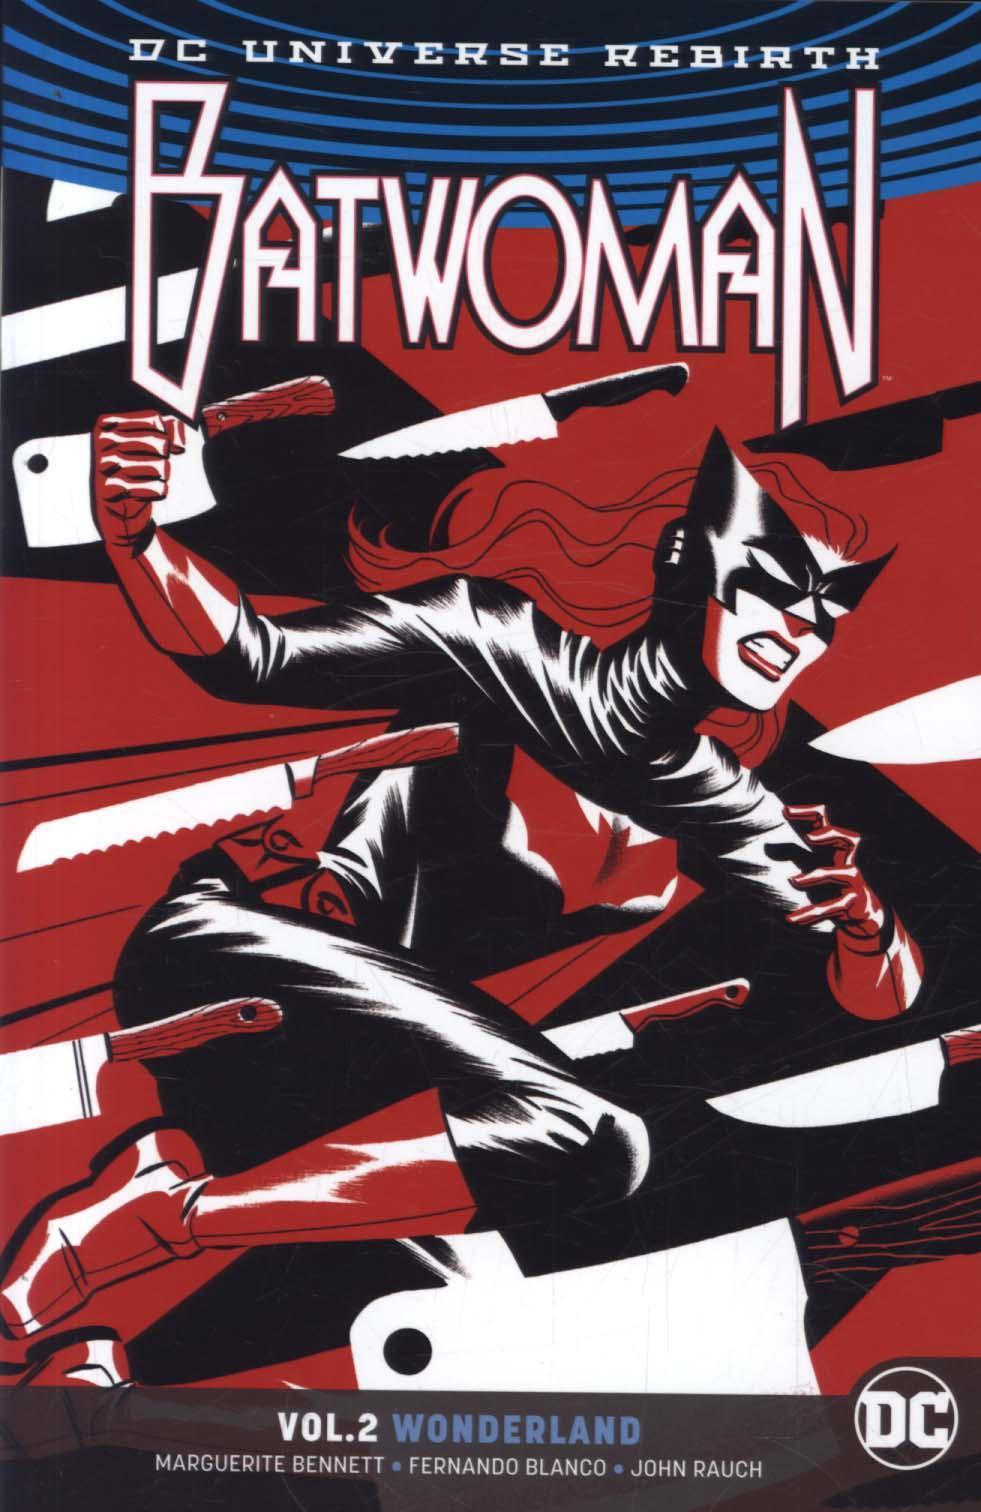 Batwoman Vol. 2